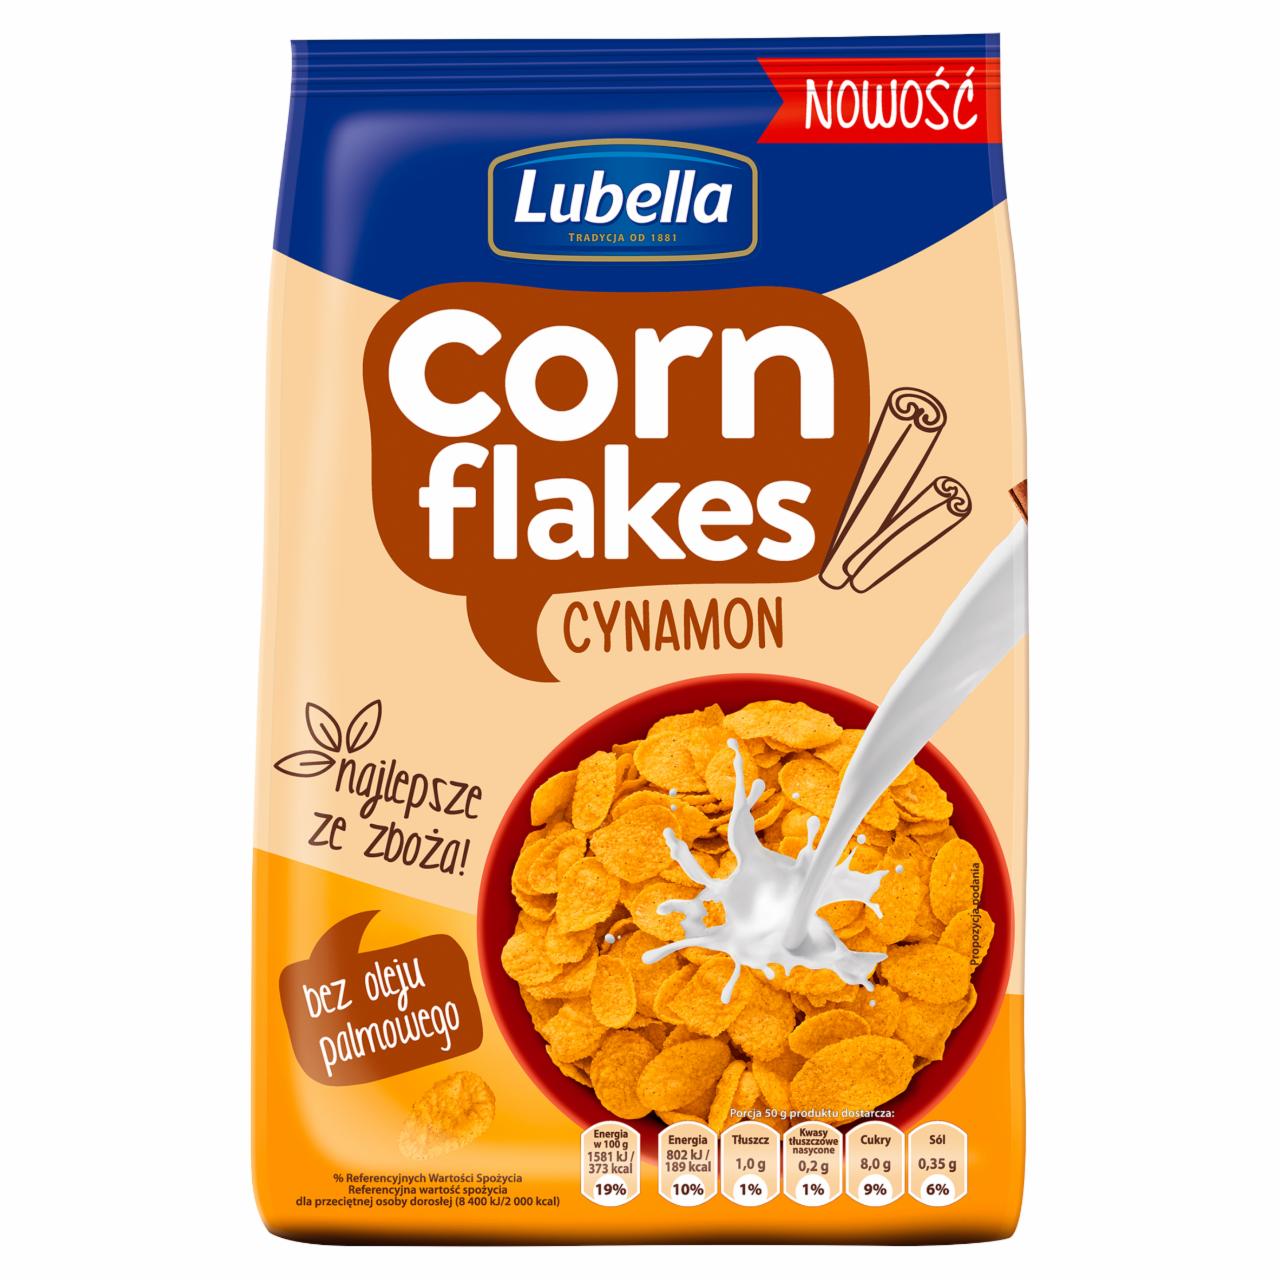 Zdjęcia - Lubella Corn Flakes Płatki kukurydziane cynamon 200 g